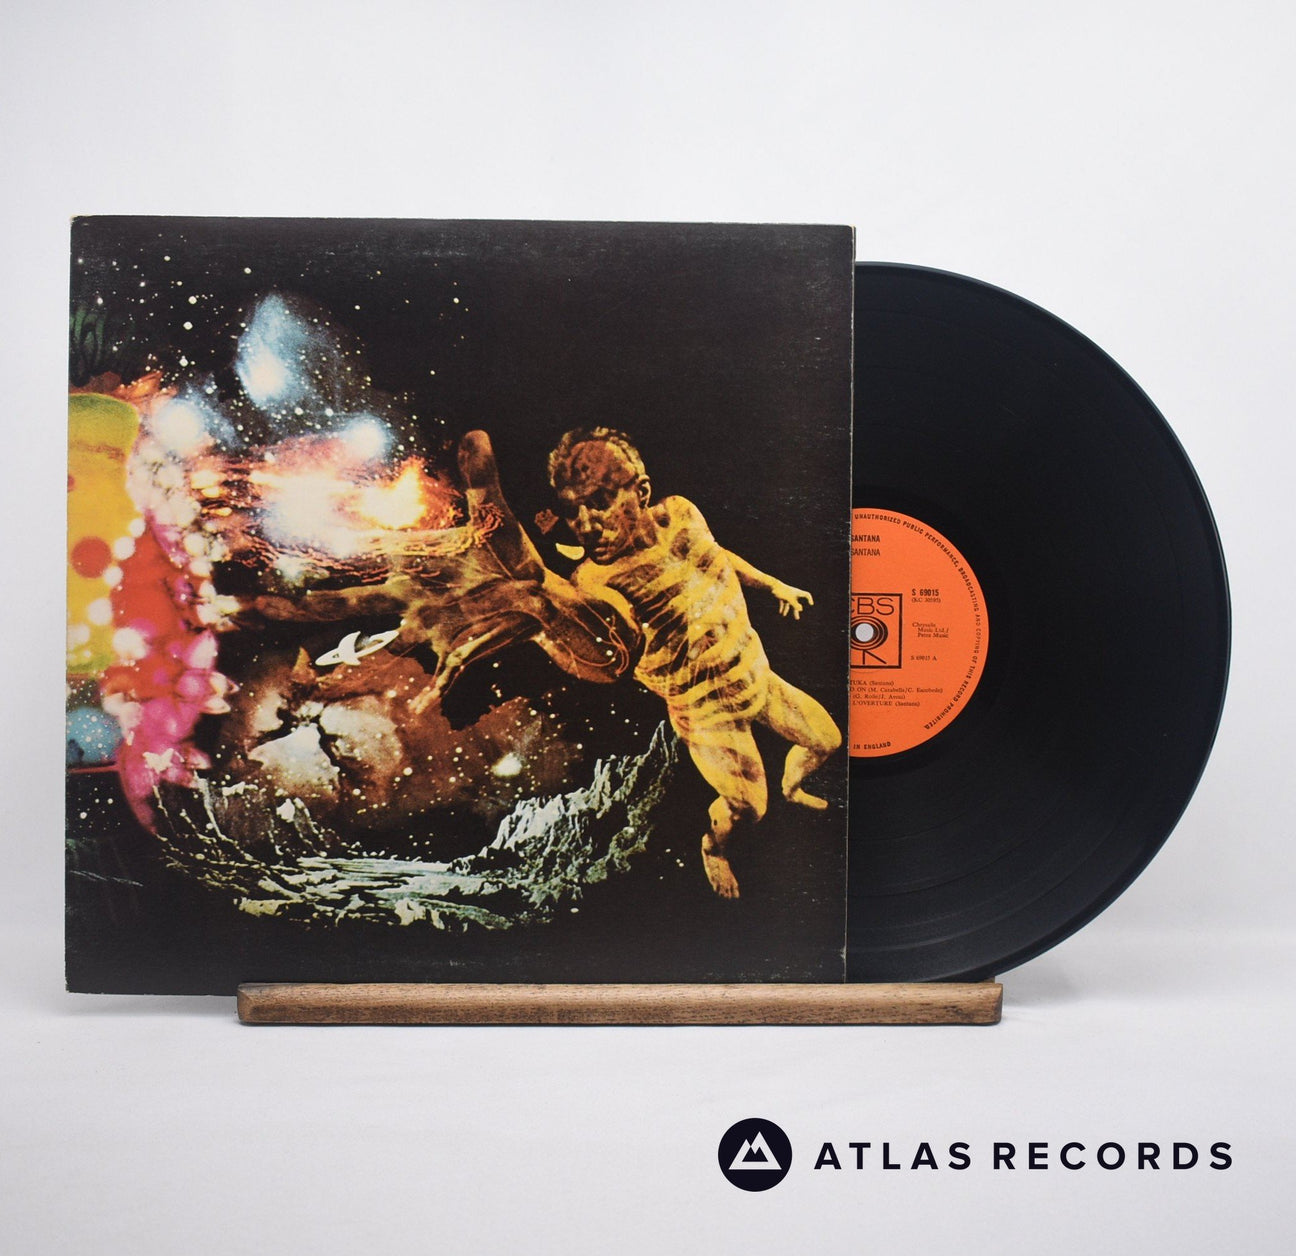 Santana Santana LP Vinyl Record - Front Cover & Record